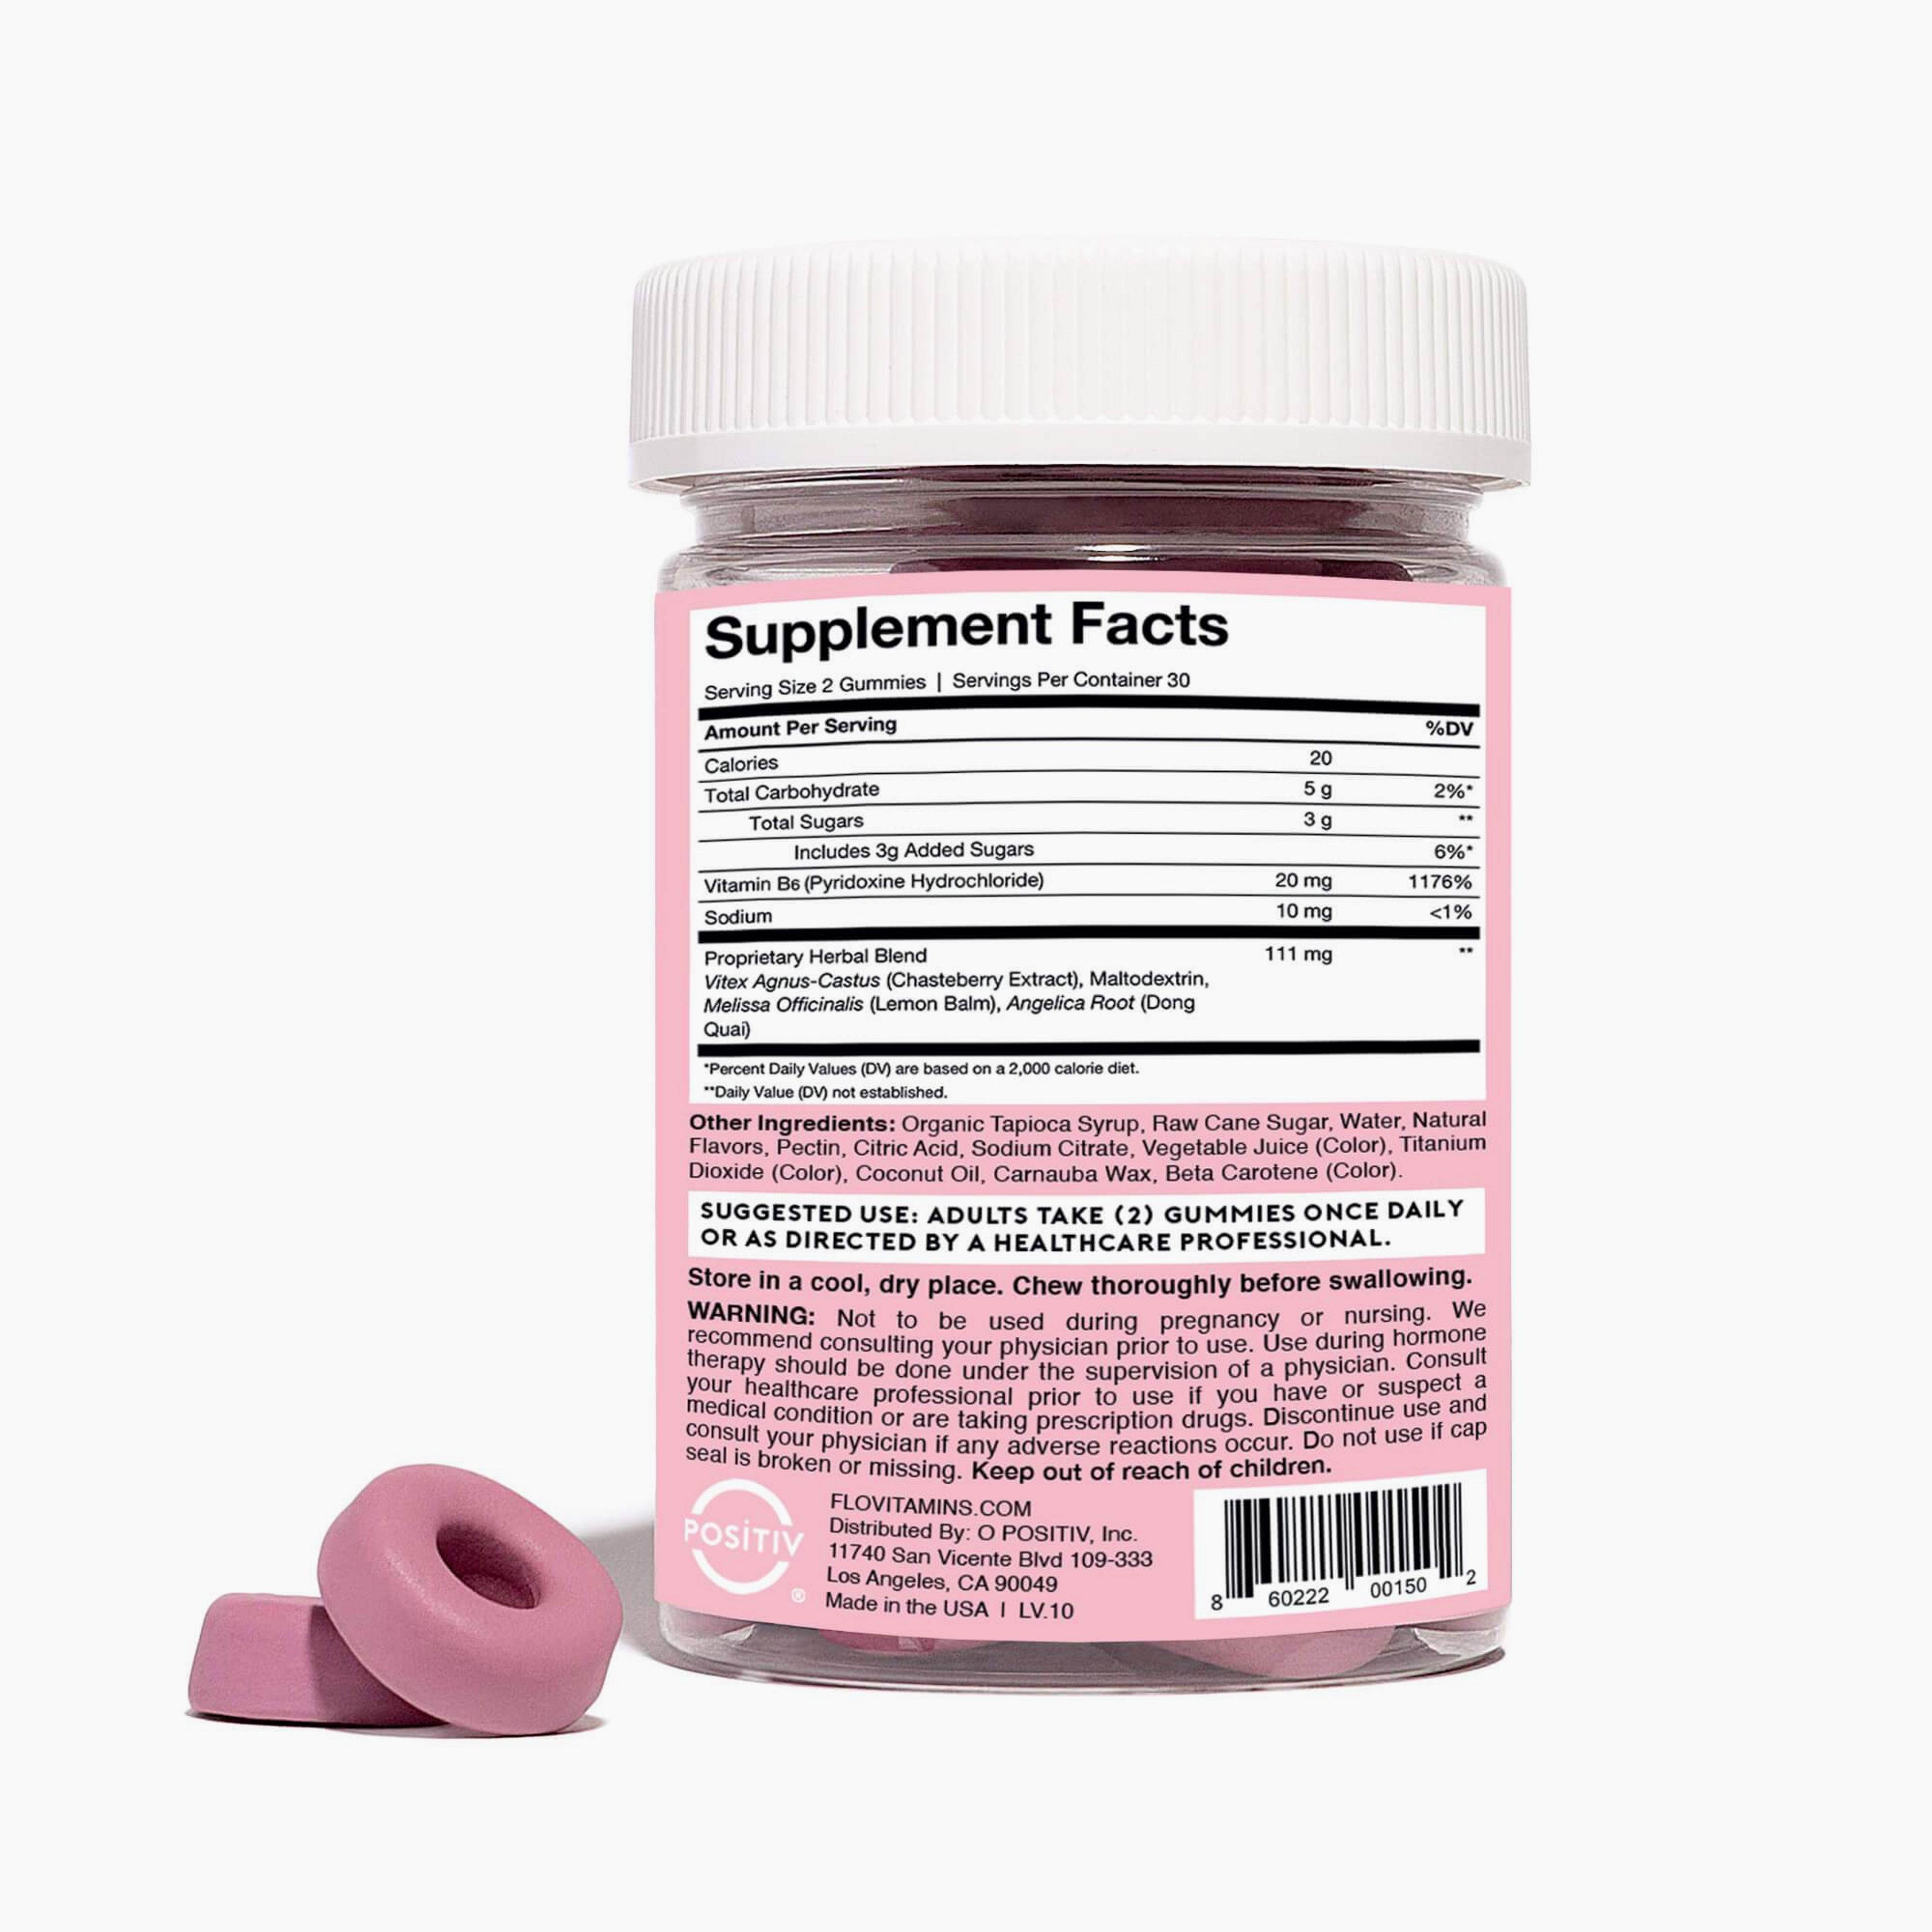 FLO - PMS Gummy Vitamins